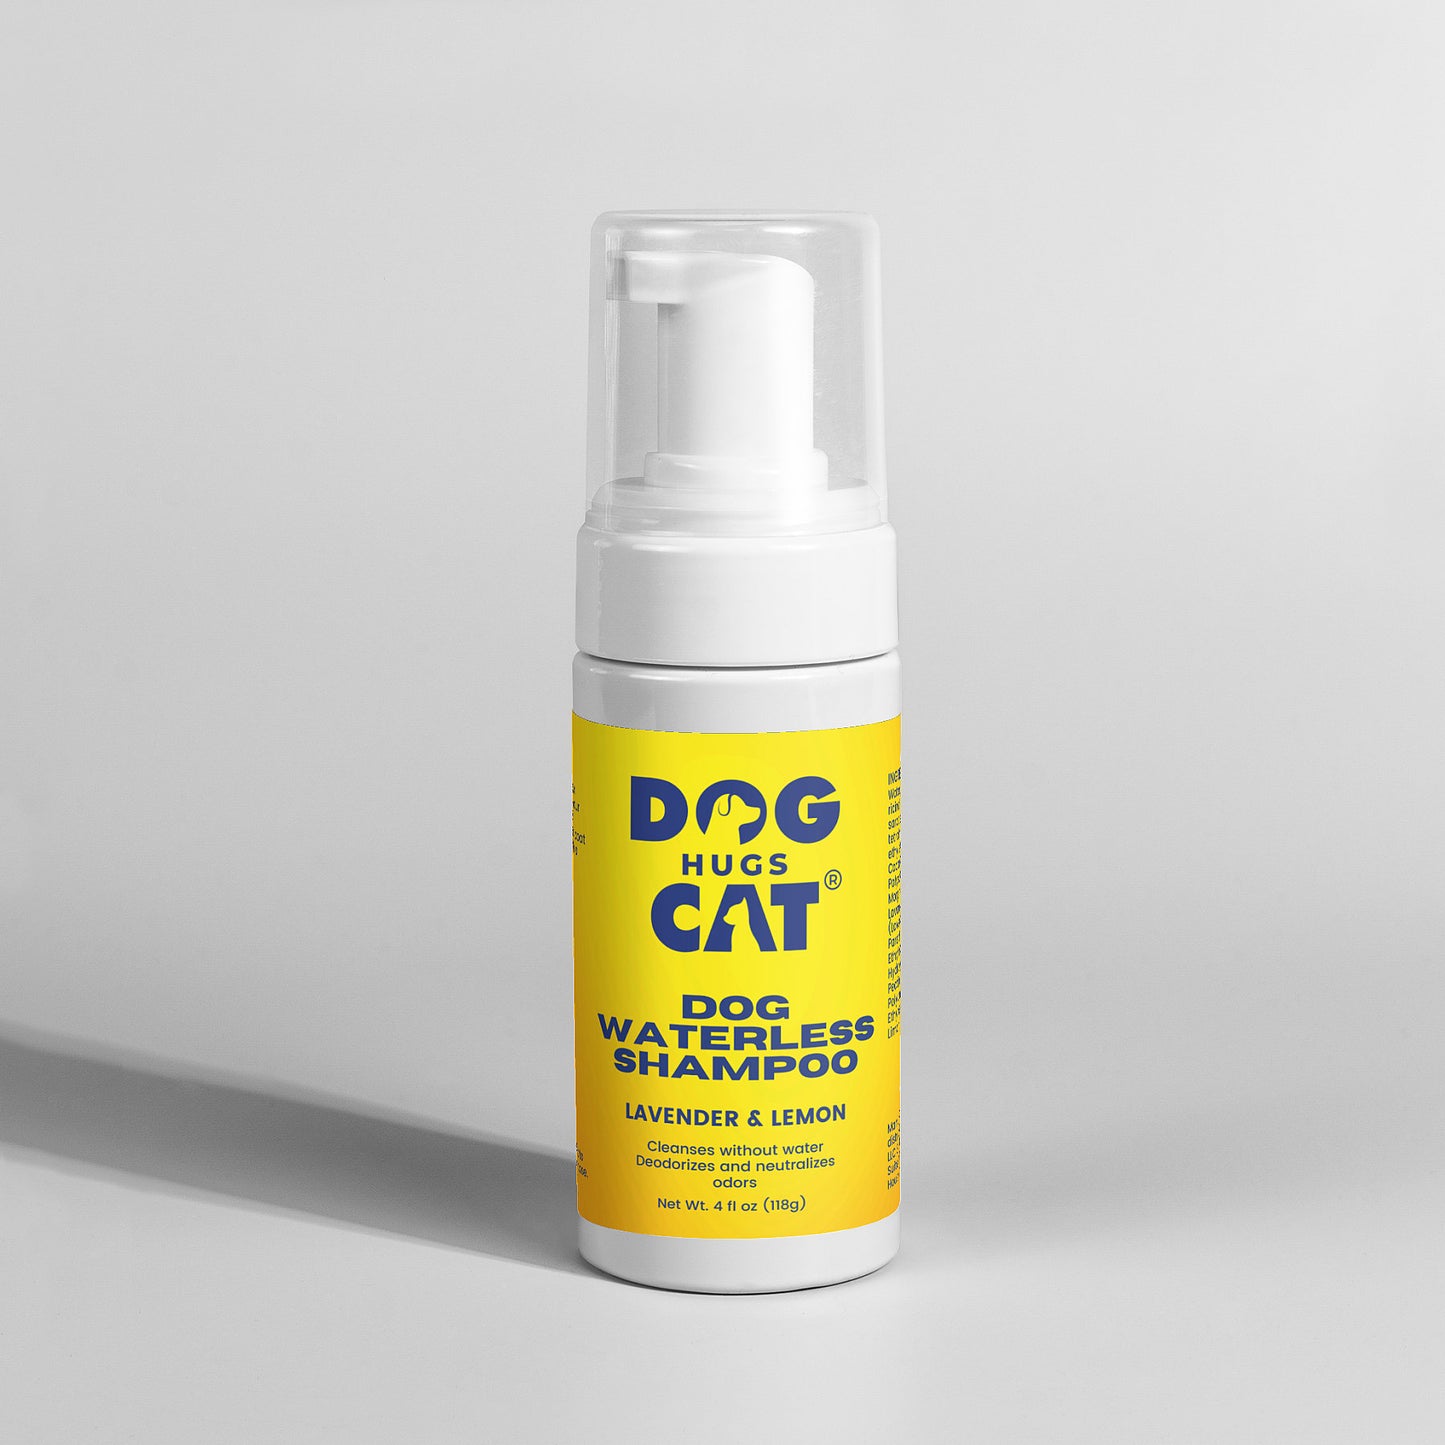 Dog Hugs Cat - Dog Waterless Shampoo